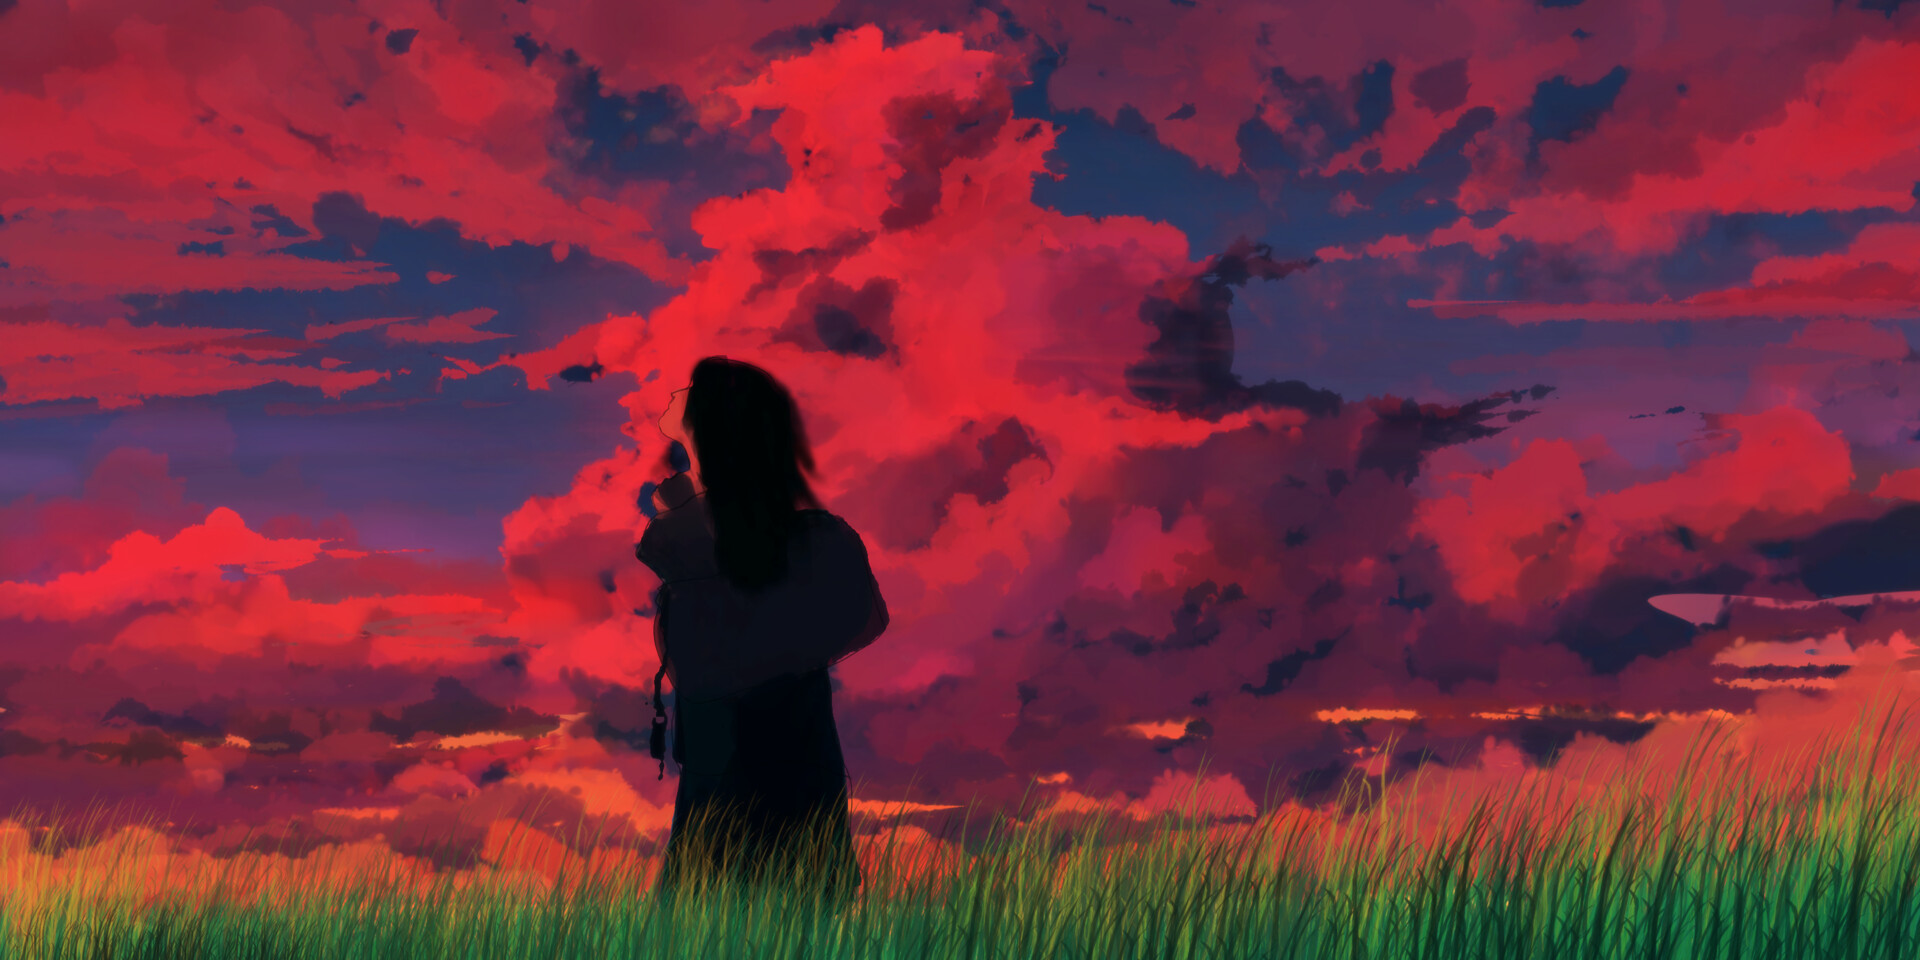 Durarara!! moon sky red clouds anime series character wallpaper | 2560x1600  | 815905 | WallpaperUP